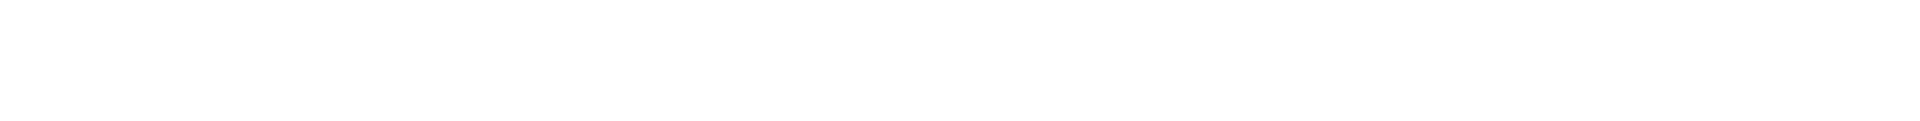 banner bottom curve shape